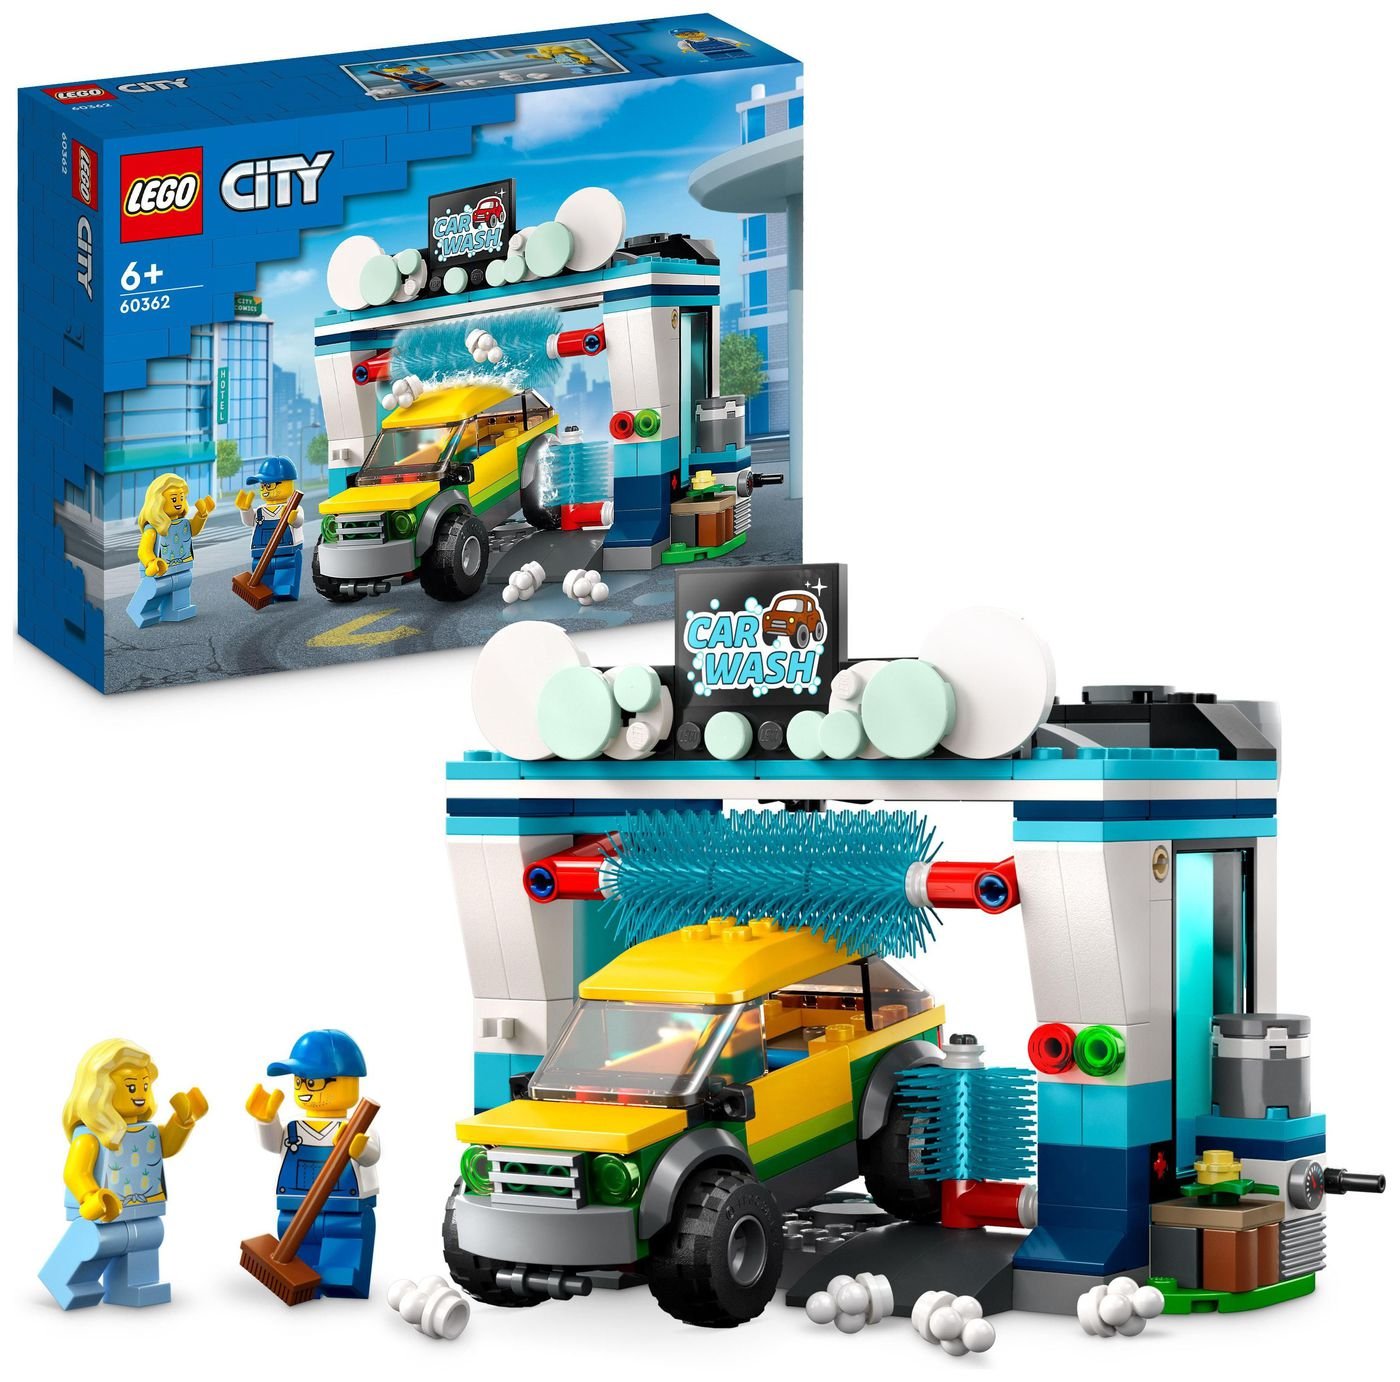 LEGO City Carwash Set with Toy Car Wash and Car 60362